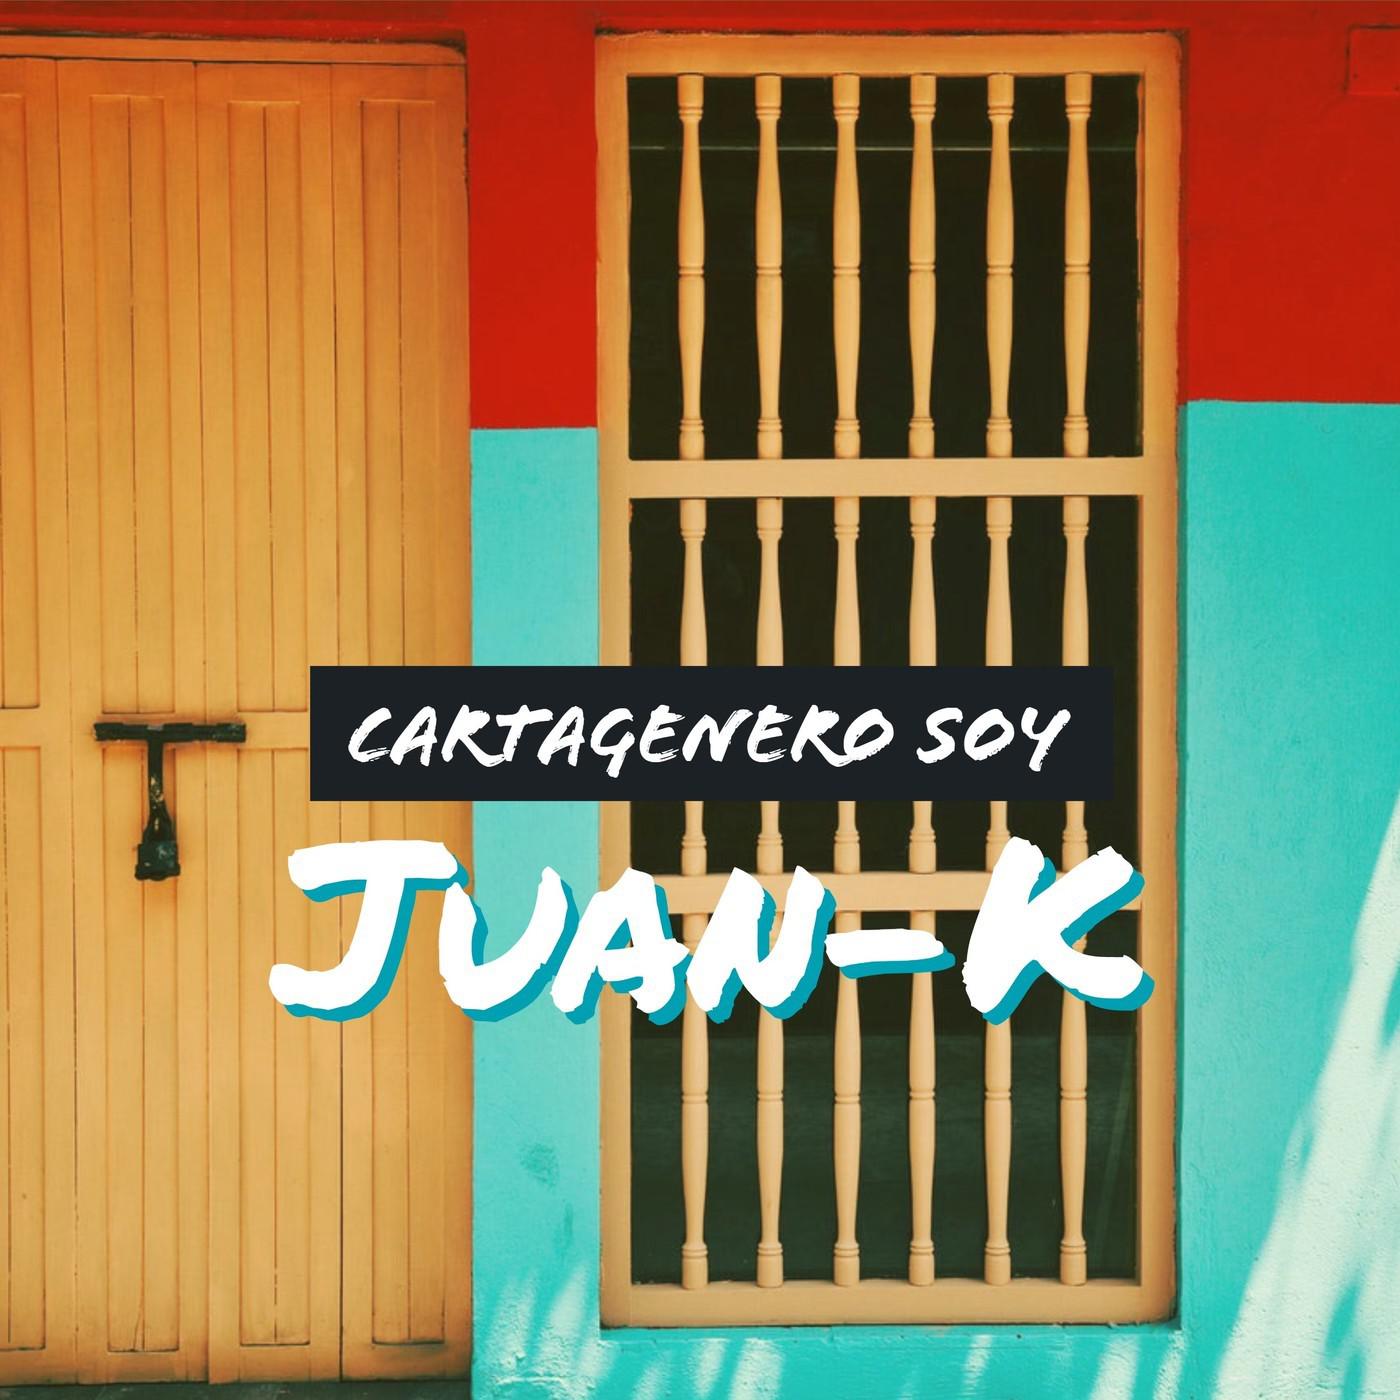 Juan-K - Cartagenero Soy